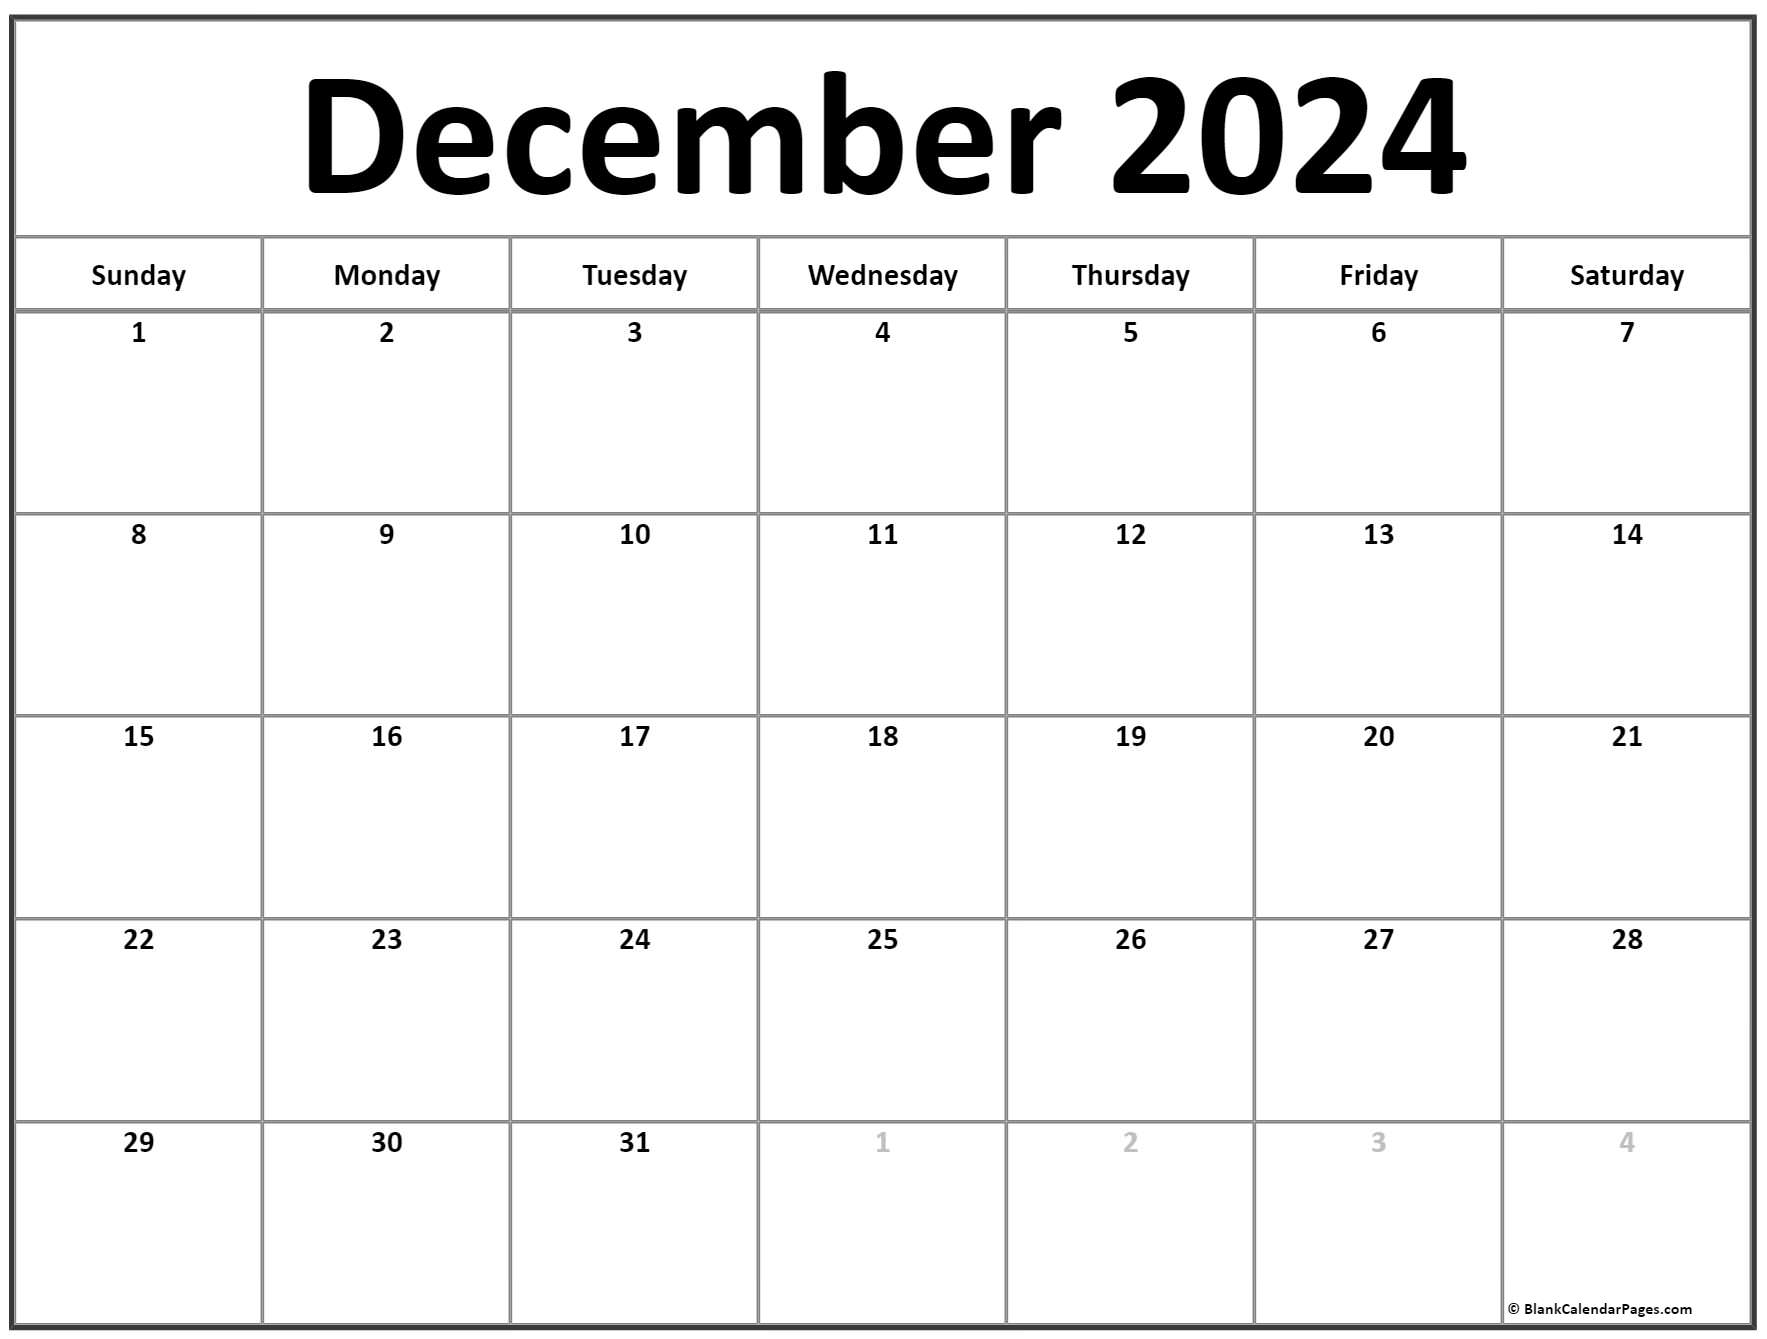 ma-sjc-december-2022-calendar-february-2022-calendar